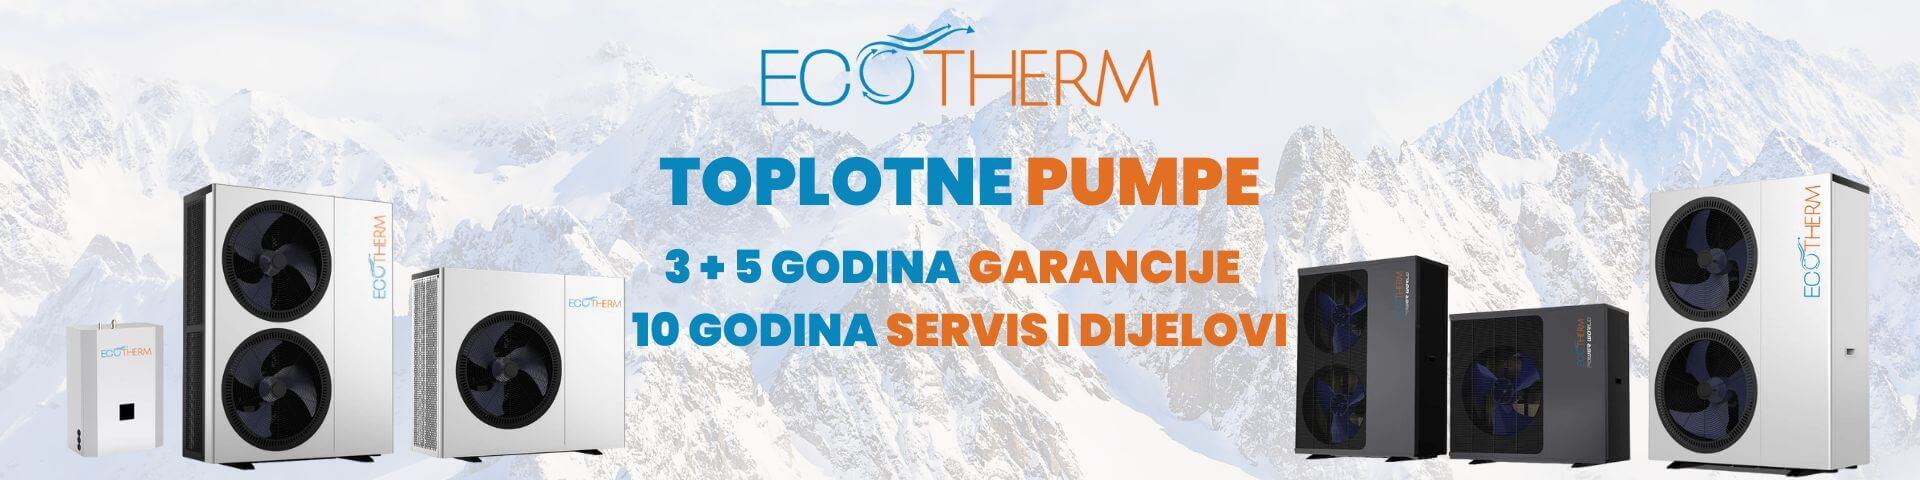 Toplotne pumpe Ecotherm 